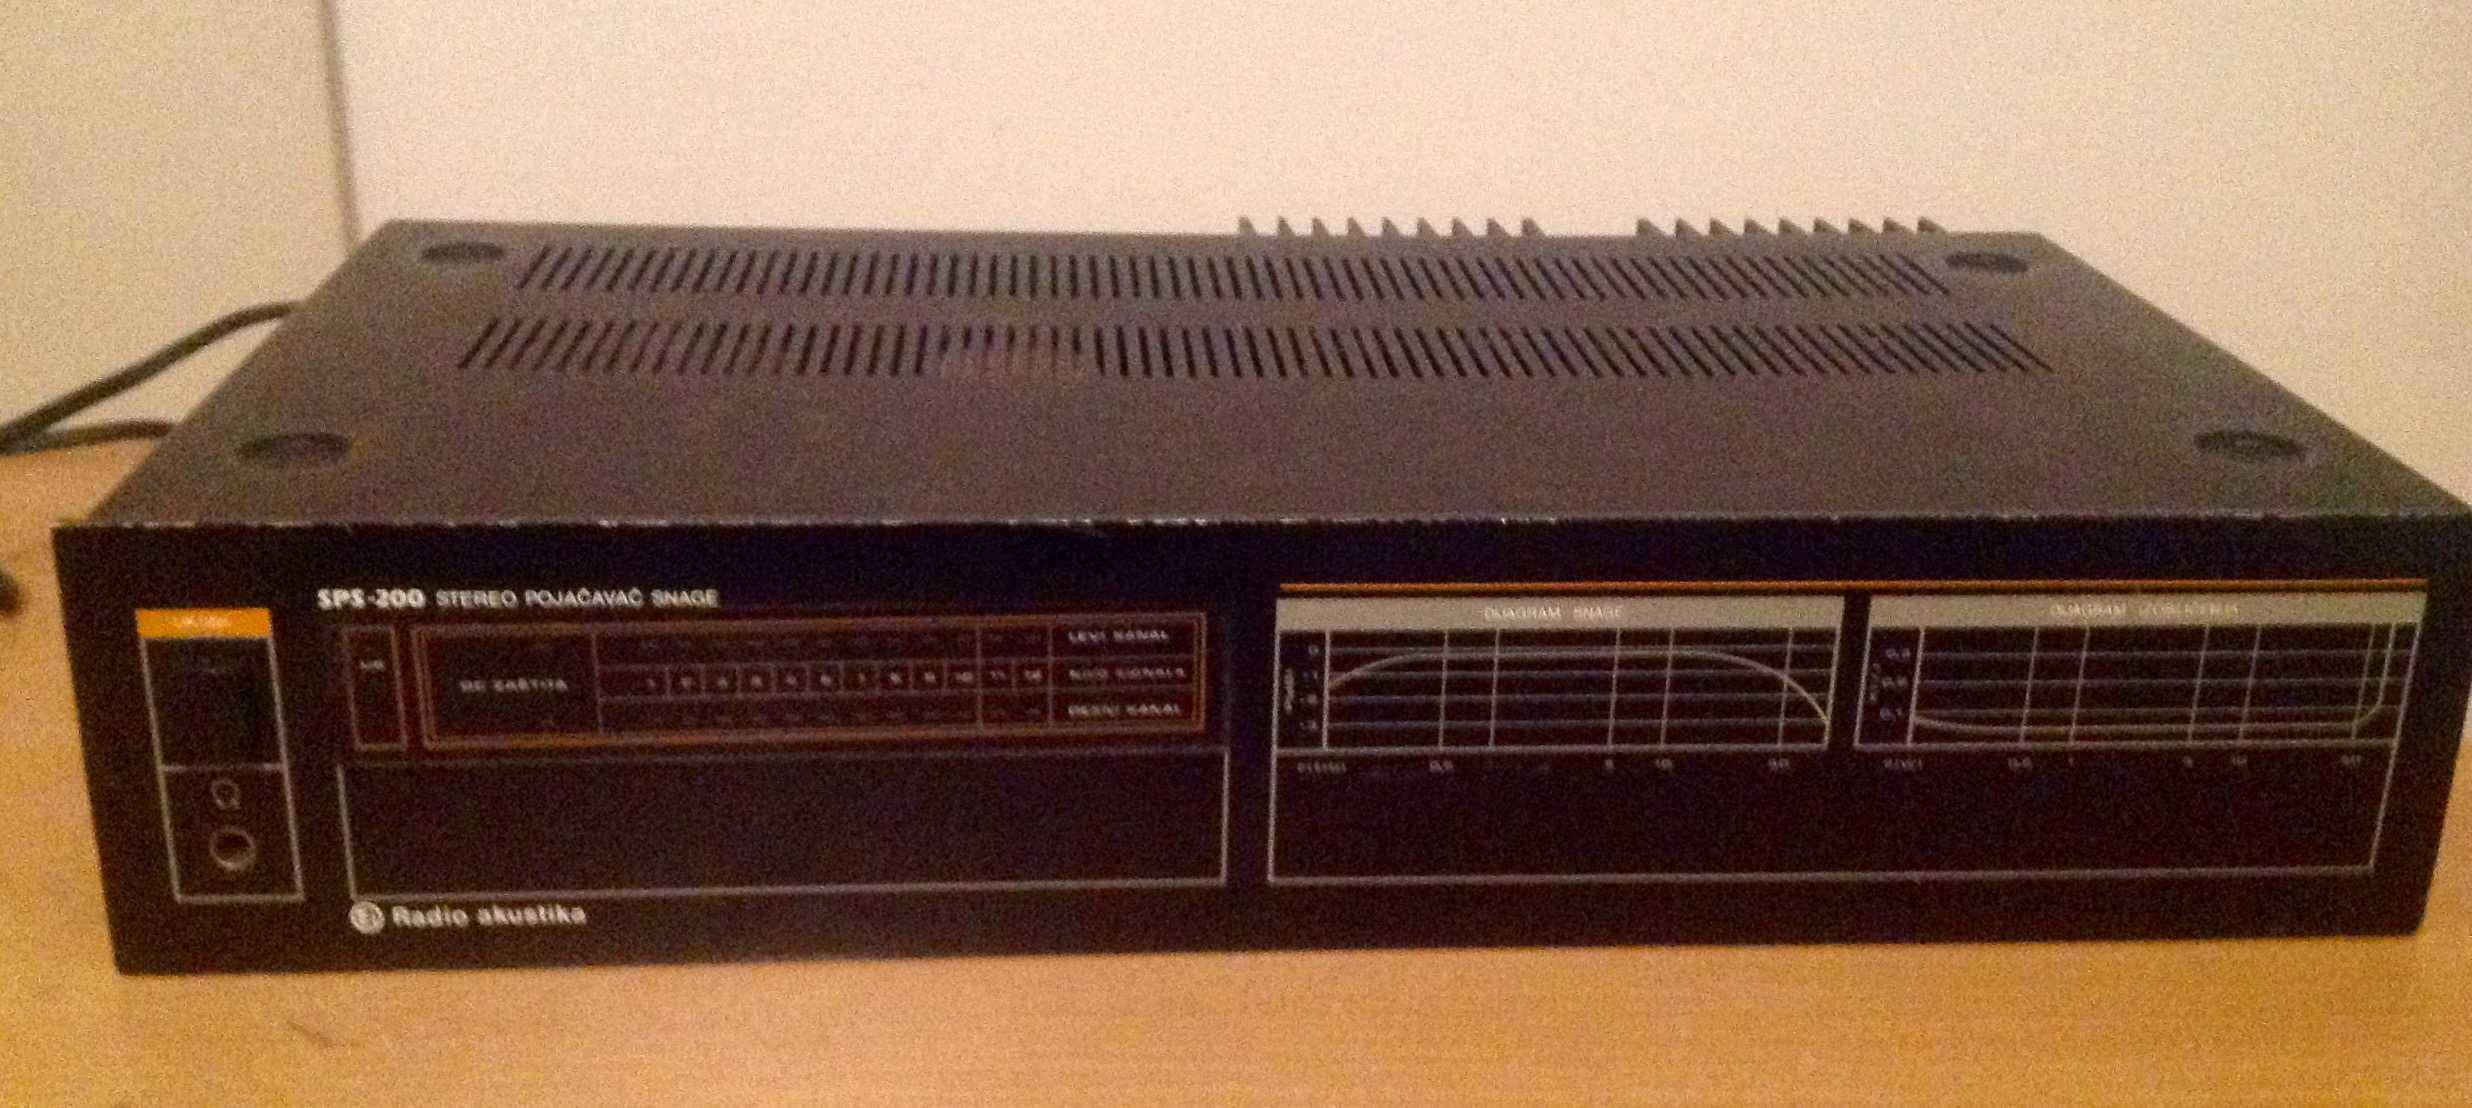 Radio Akustika SPS-200